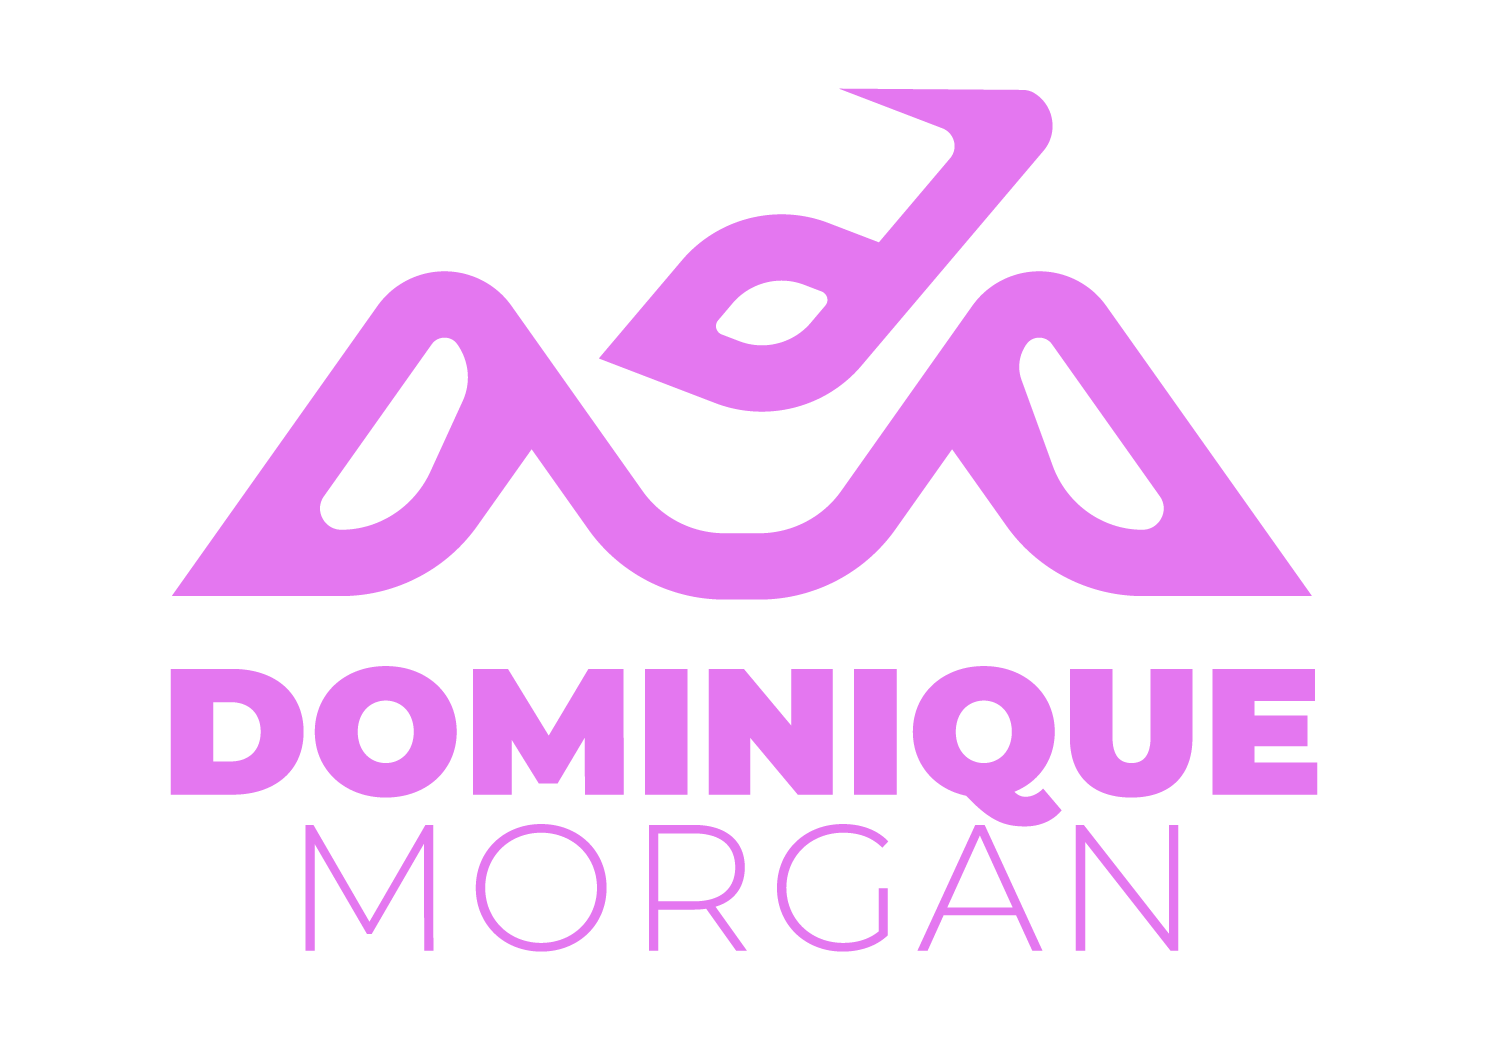 Dominique Morgan